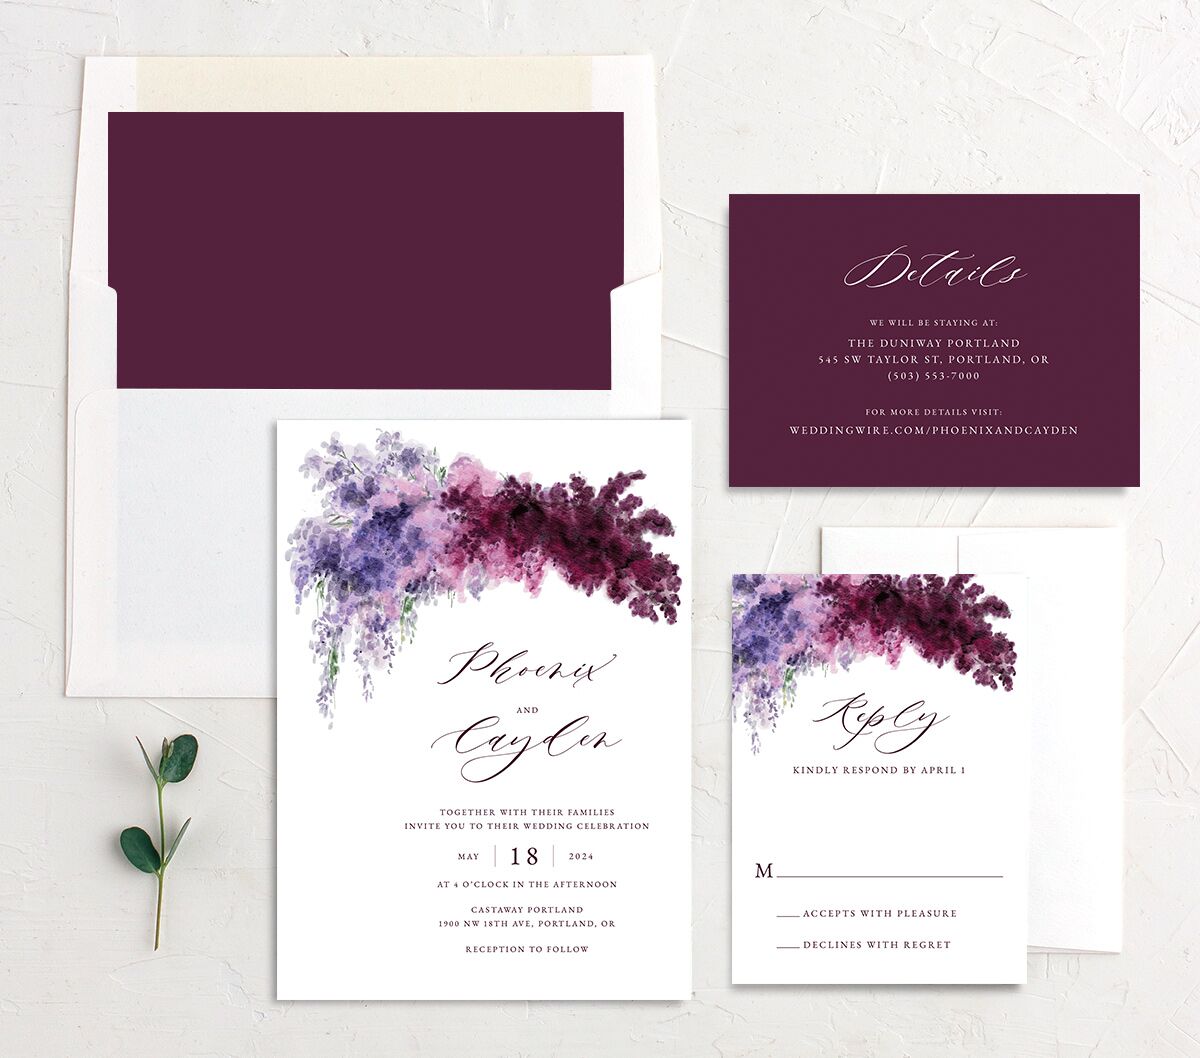 Ethereal Blooms Wedding Invitations suite in Jewel Purple